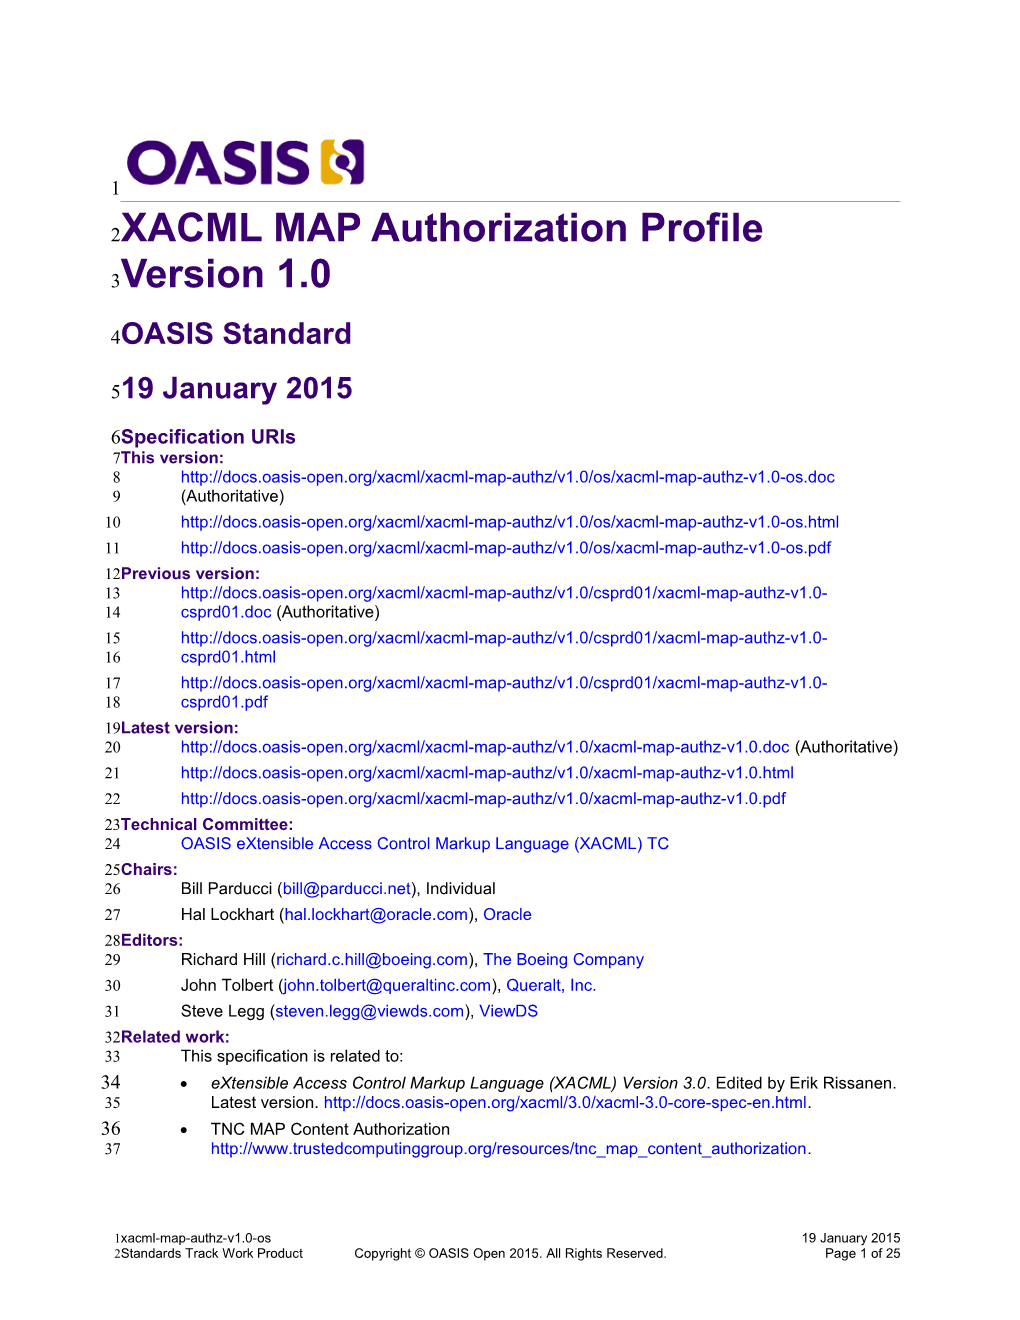 XACML MAP Authorization Profile Version 1.0